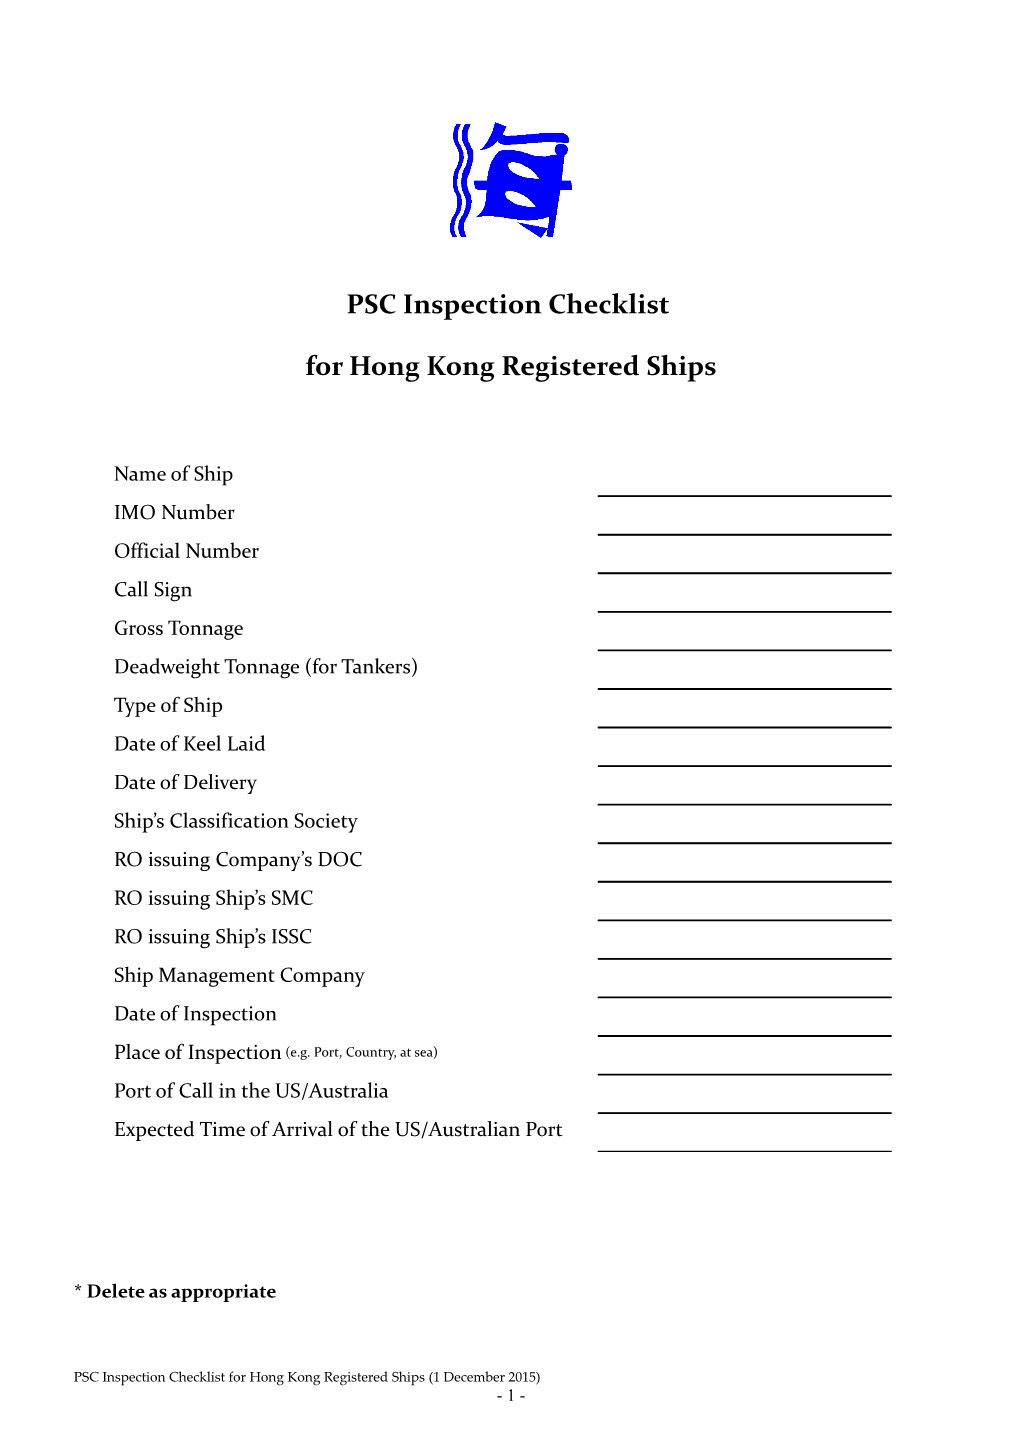 PSC Inspection Checklist of Hong Kong Registered Ships